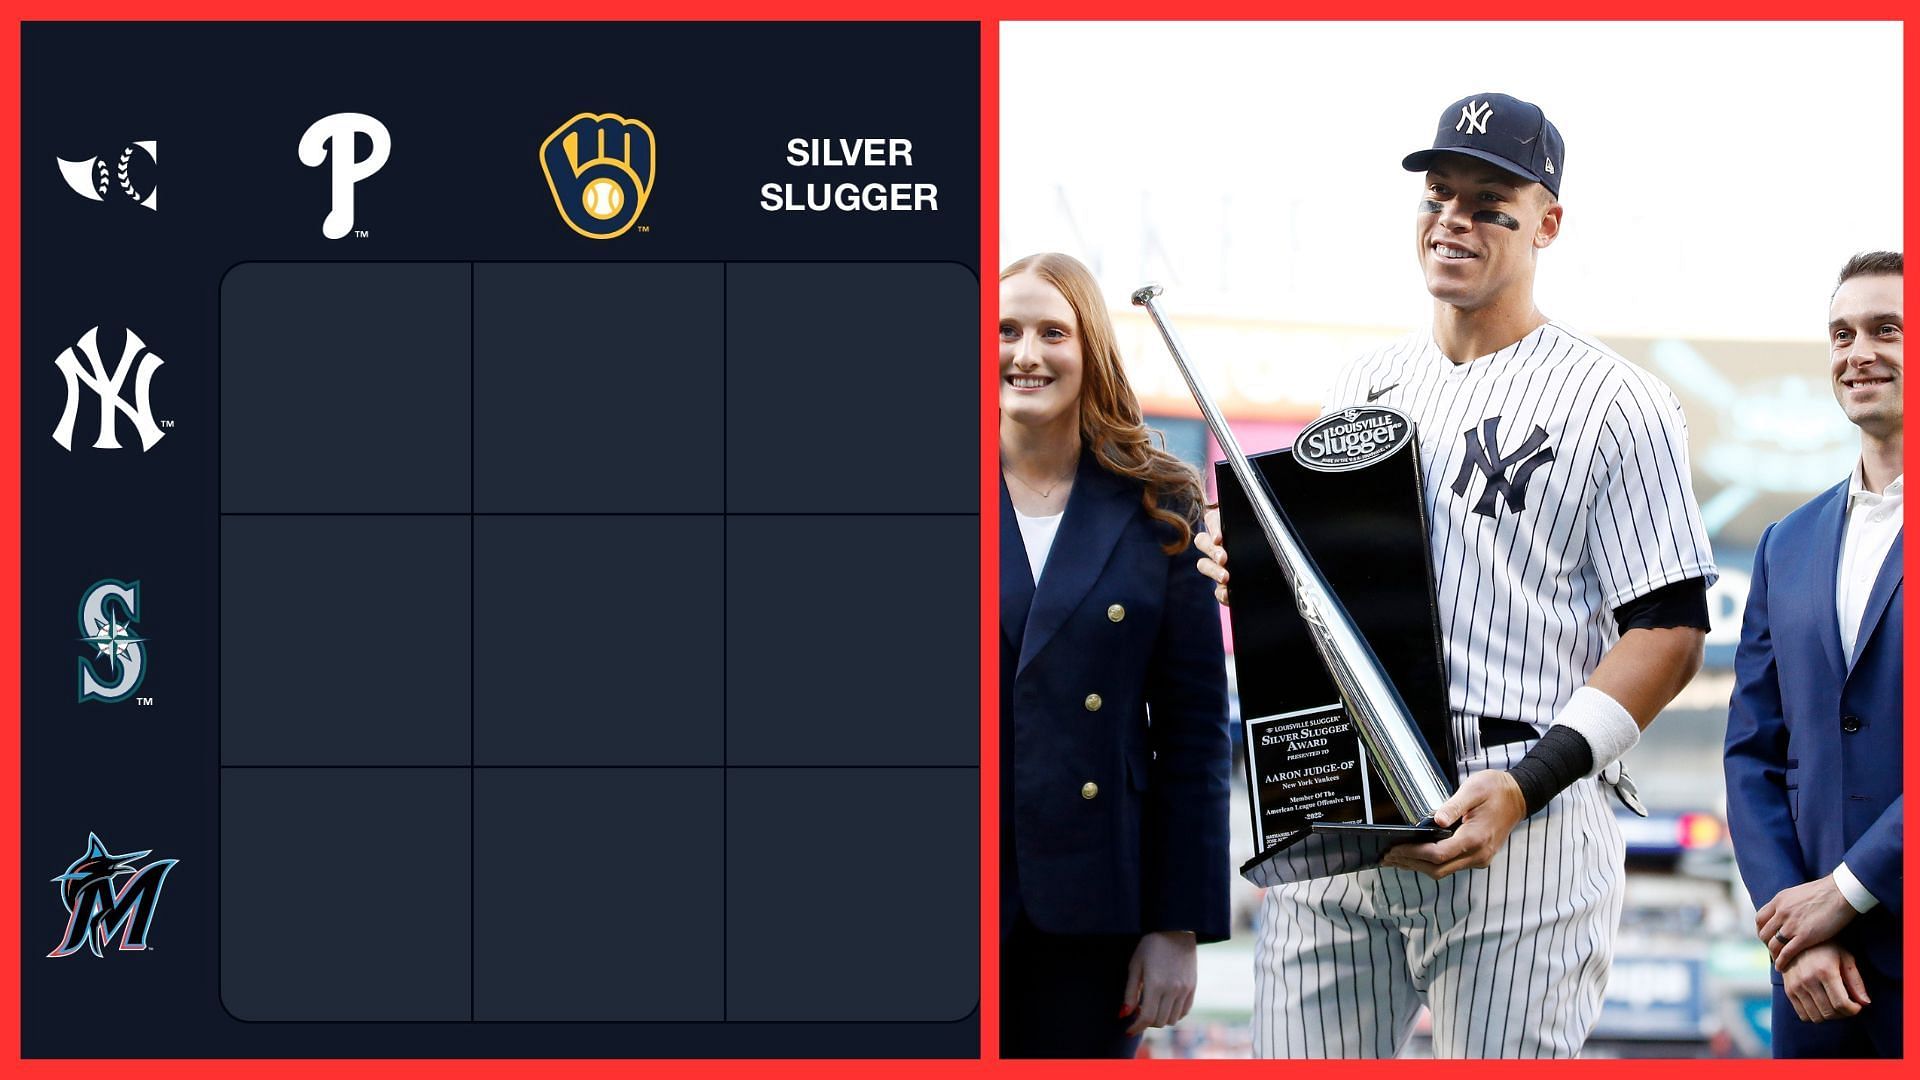 Aaron Judge hrs 4x all-star 2x silver slugger New York Yankees